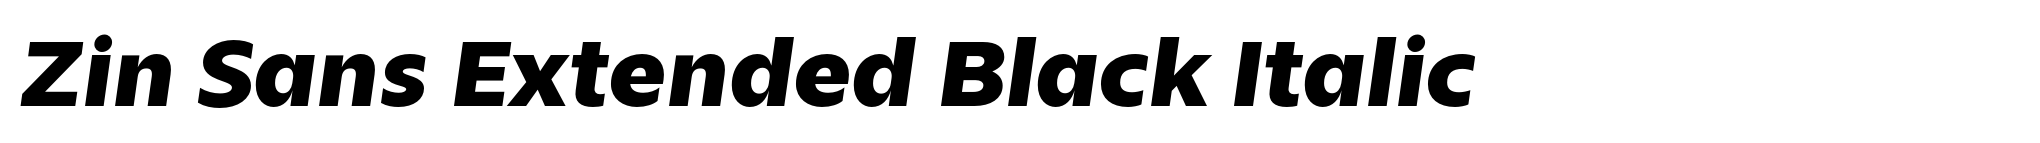 Zin Sans Extended Black Italic image